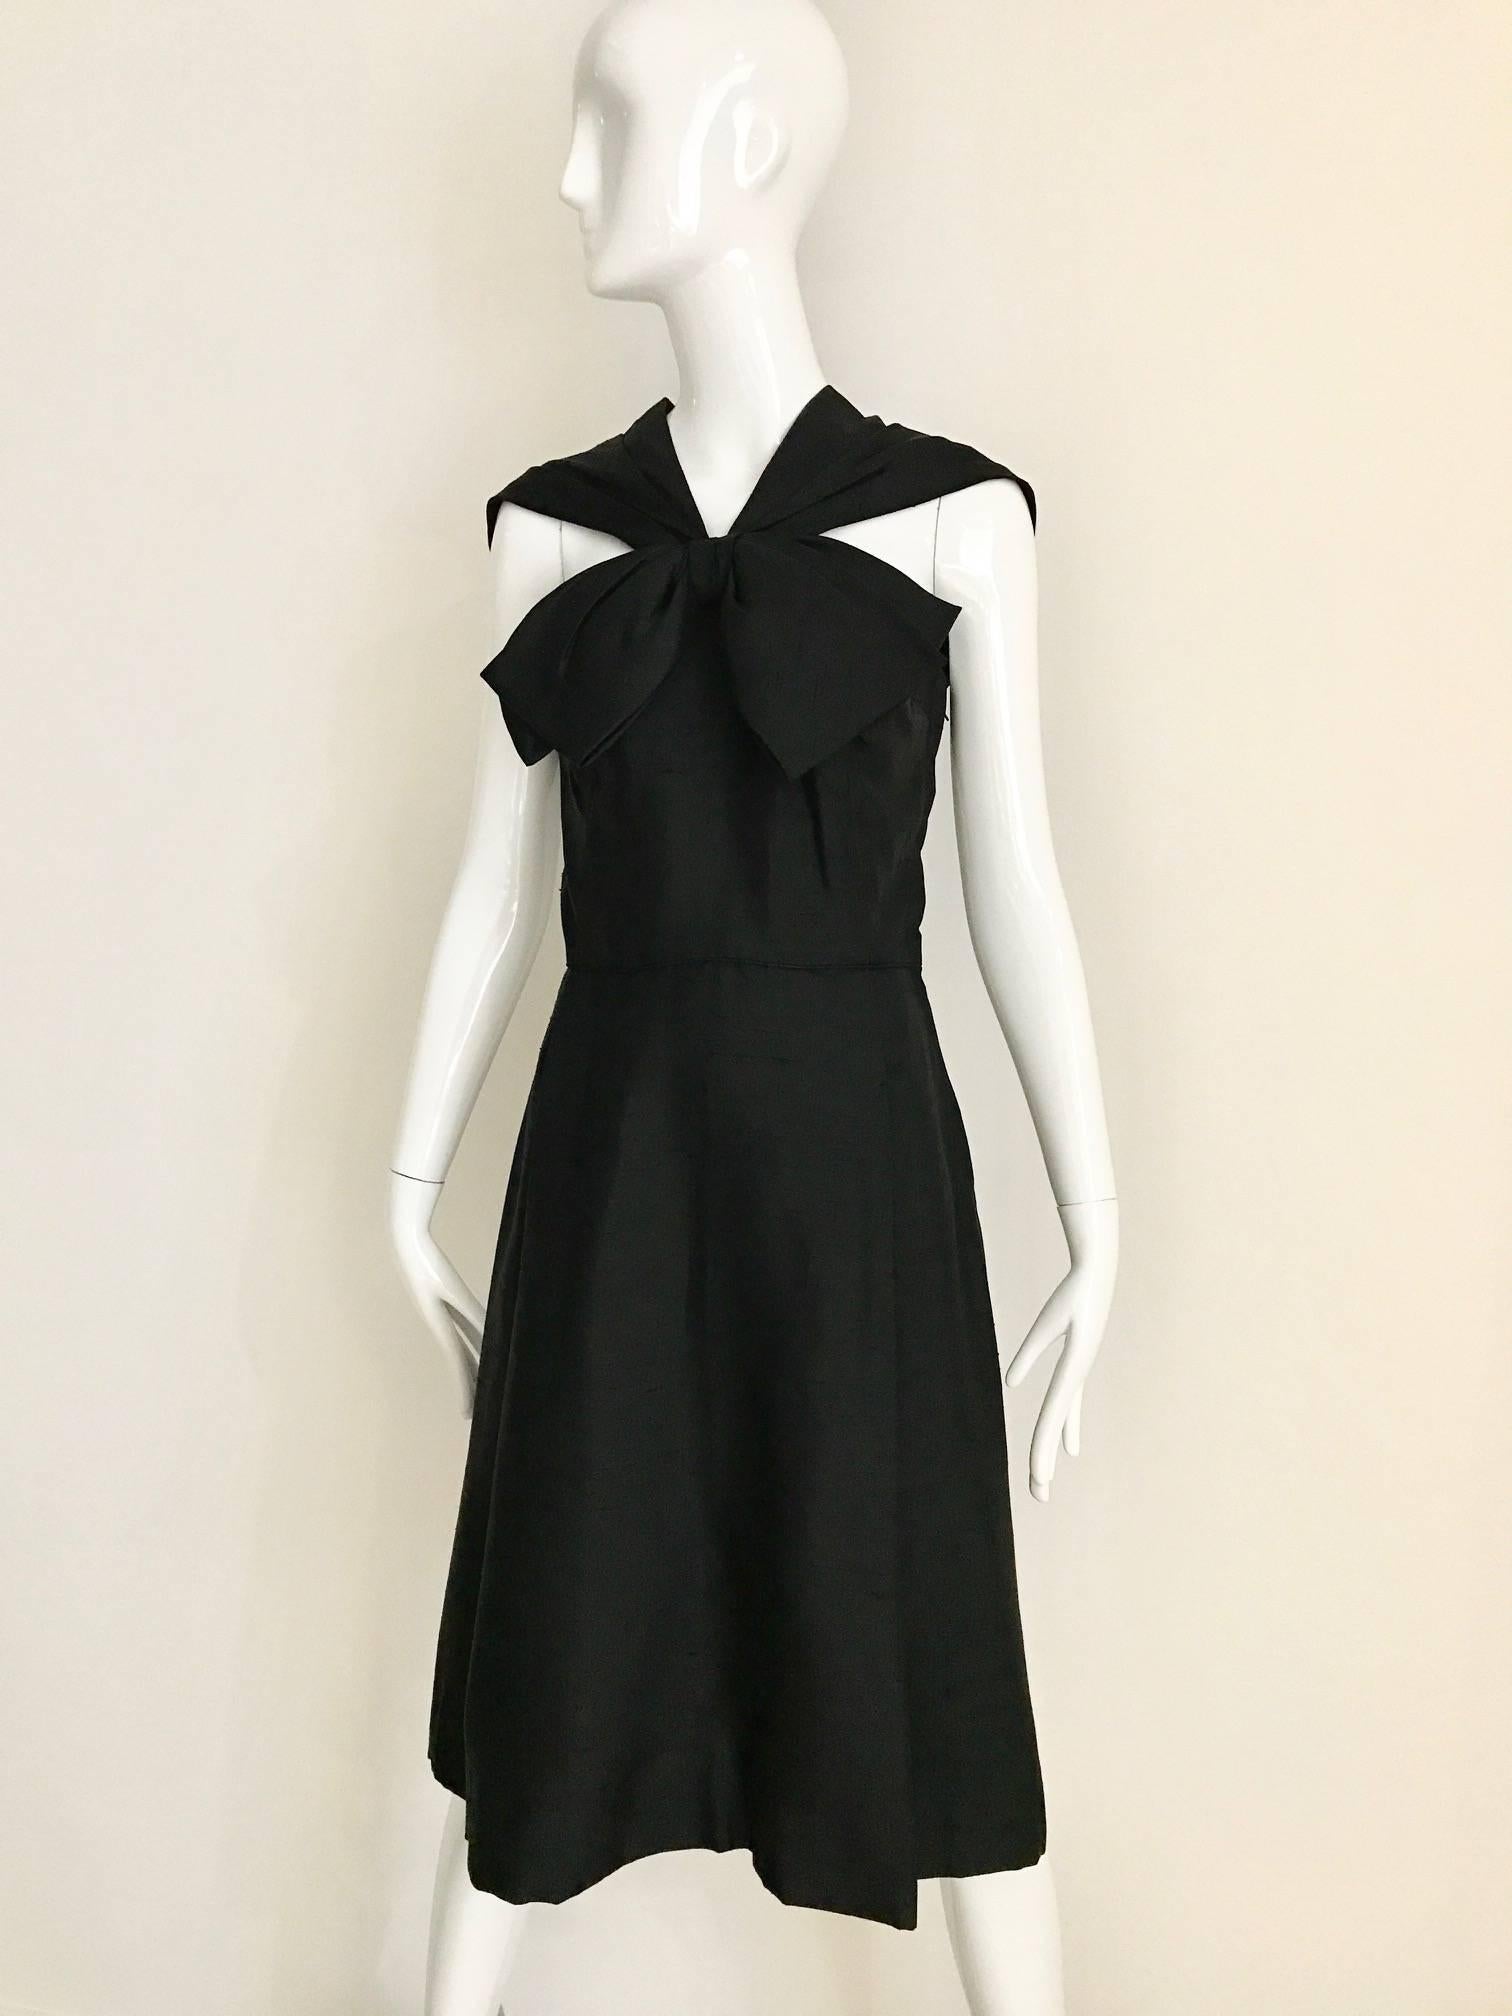 black dress with big bow